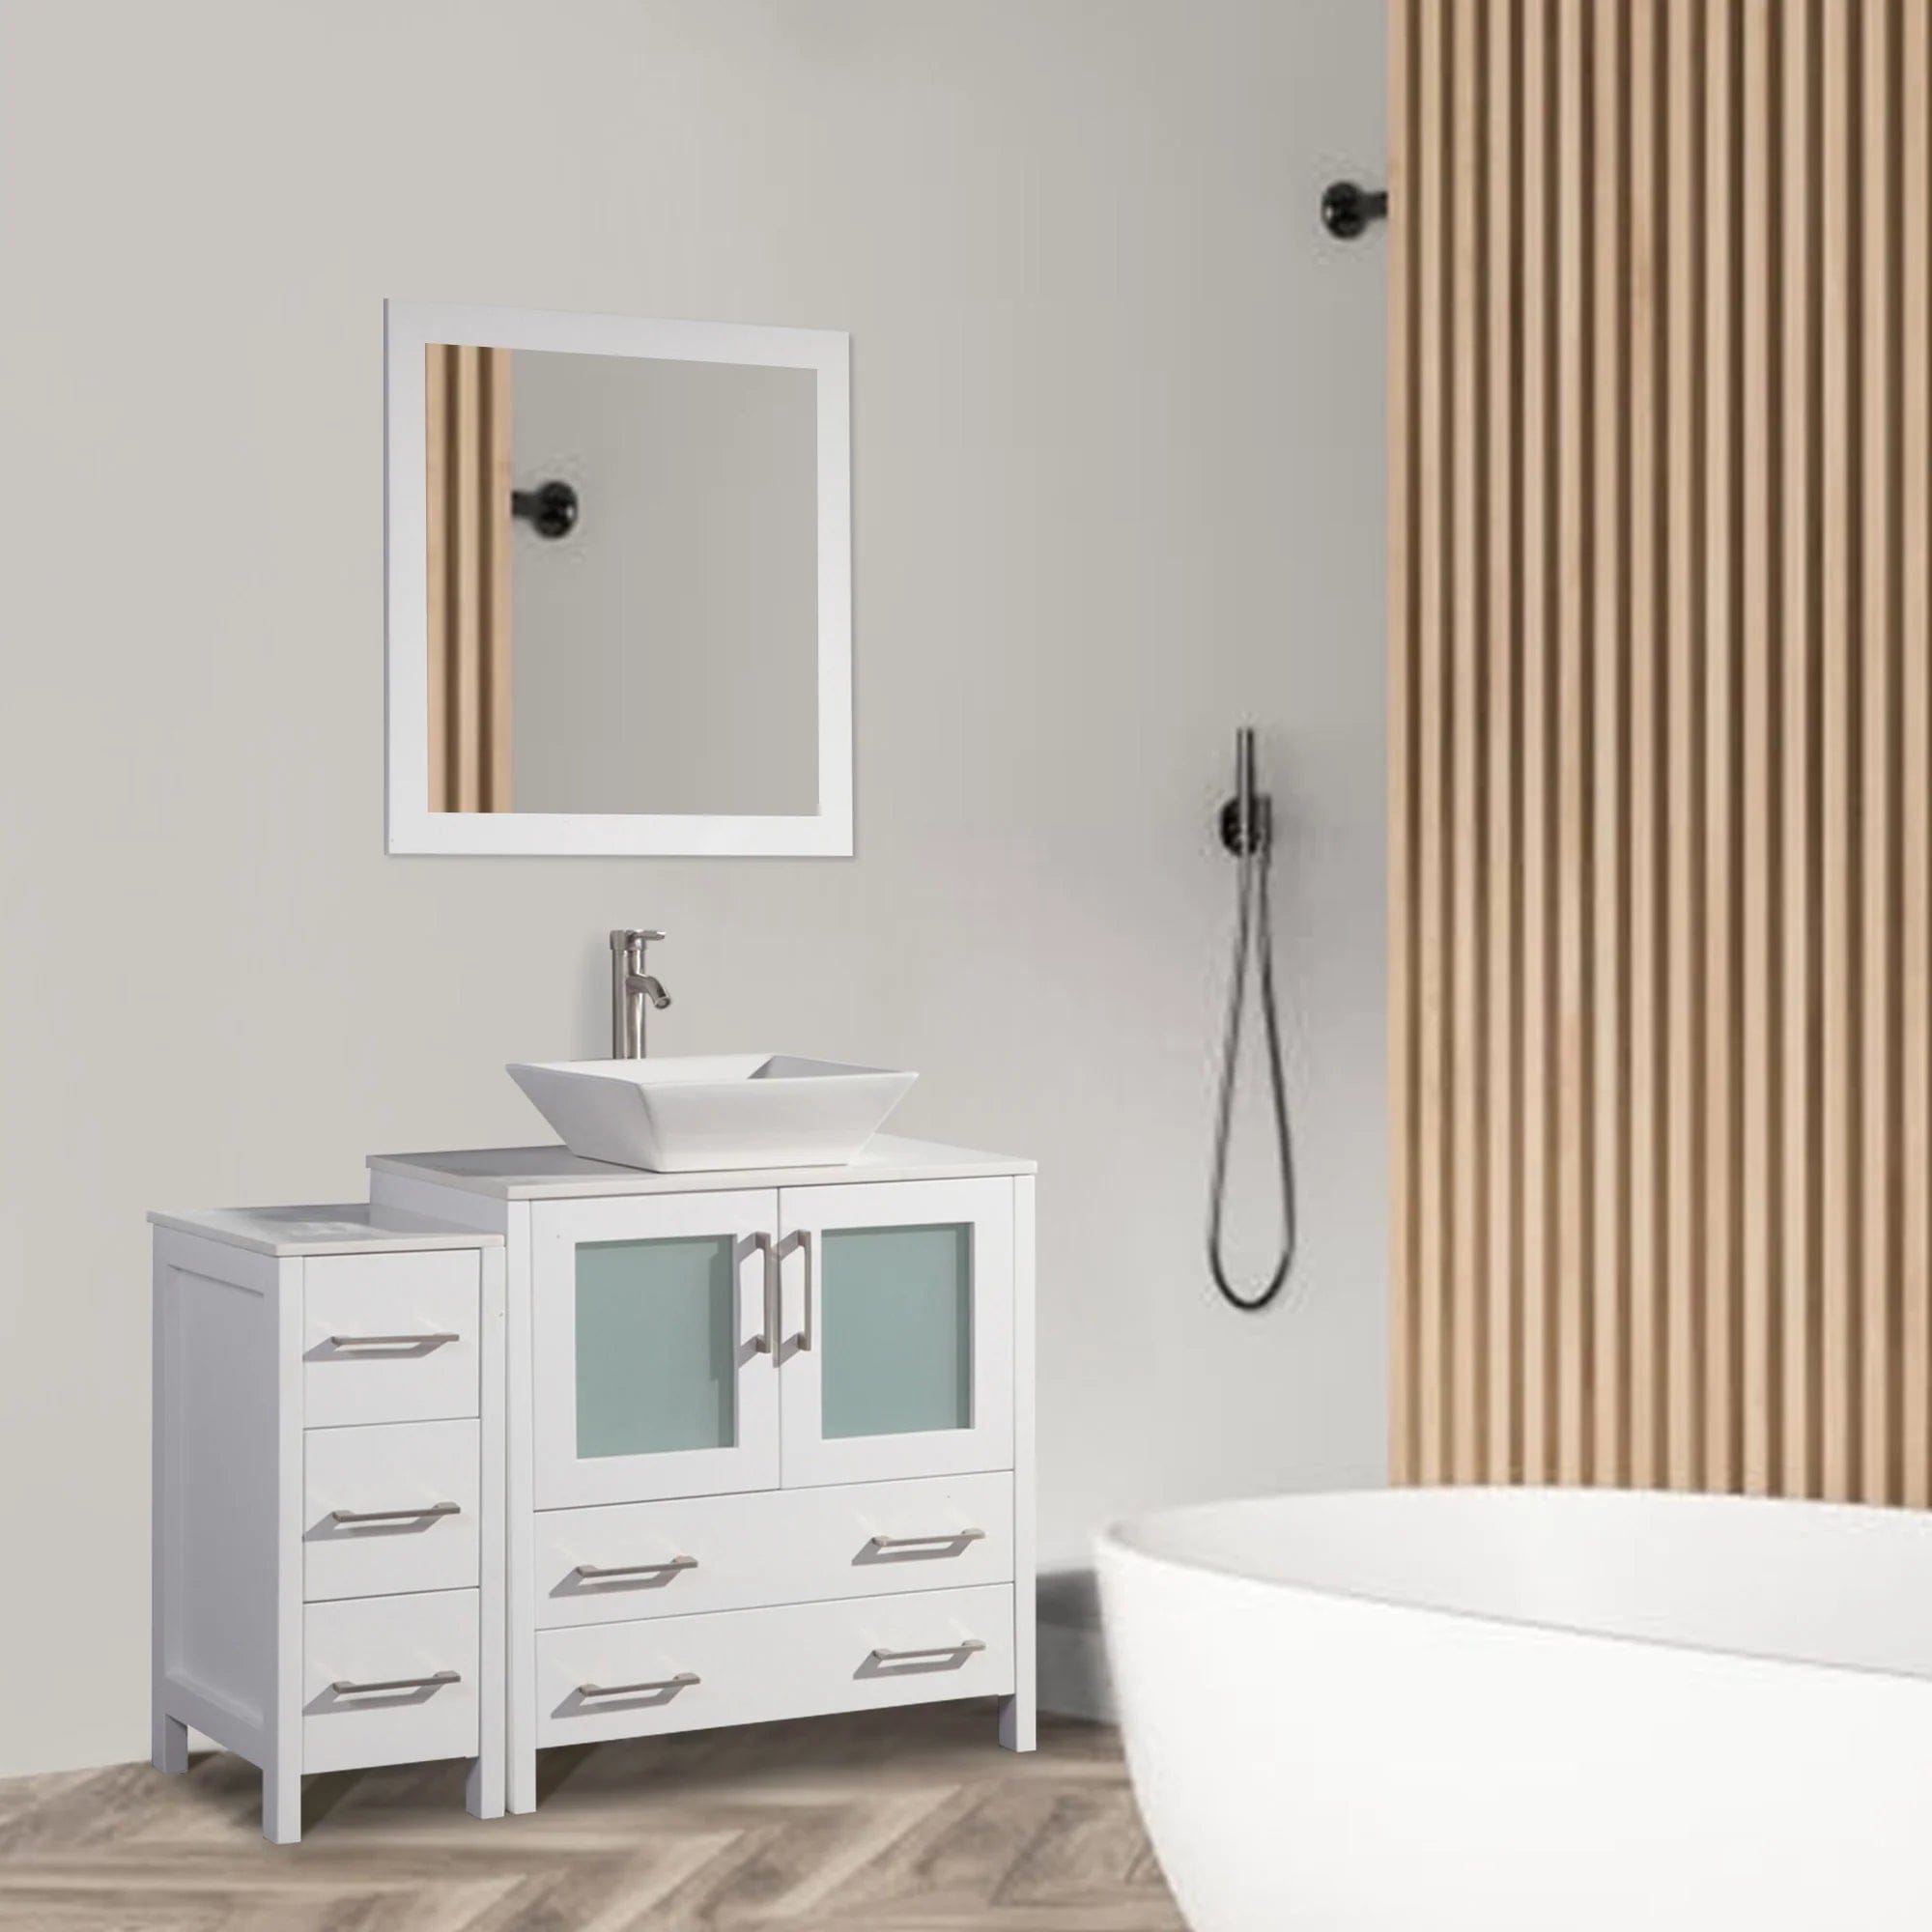 42 in. Single Sink Bathroom Vanity Combo Set in White - Decohub Home